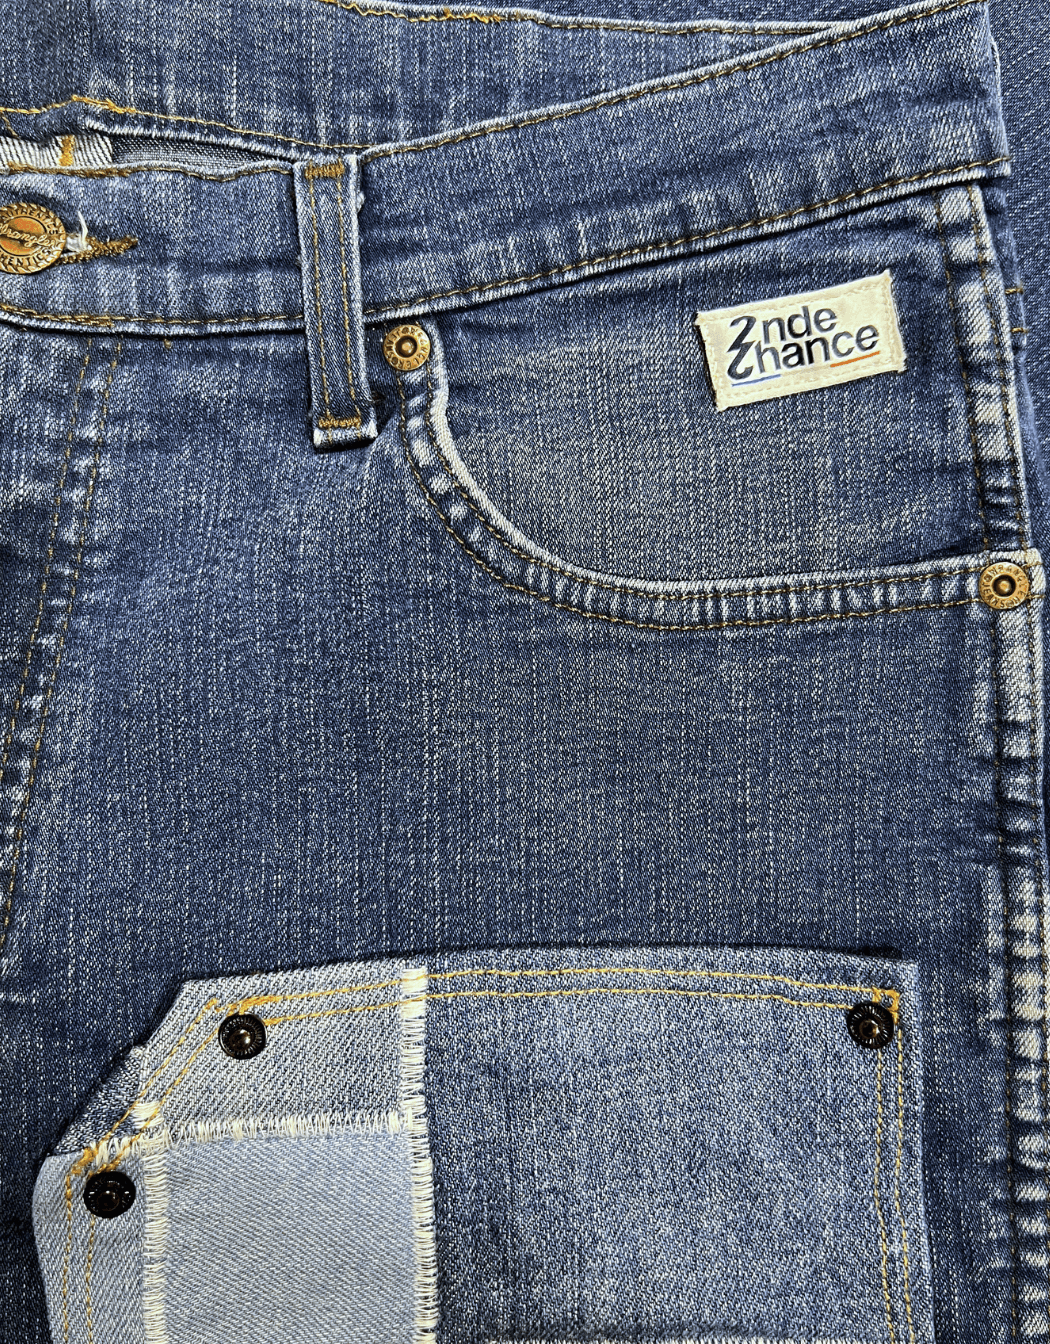 jeans-rework-upcycling-2ndechance-patchworks-artisanat-madeindijon-devant-details